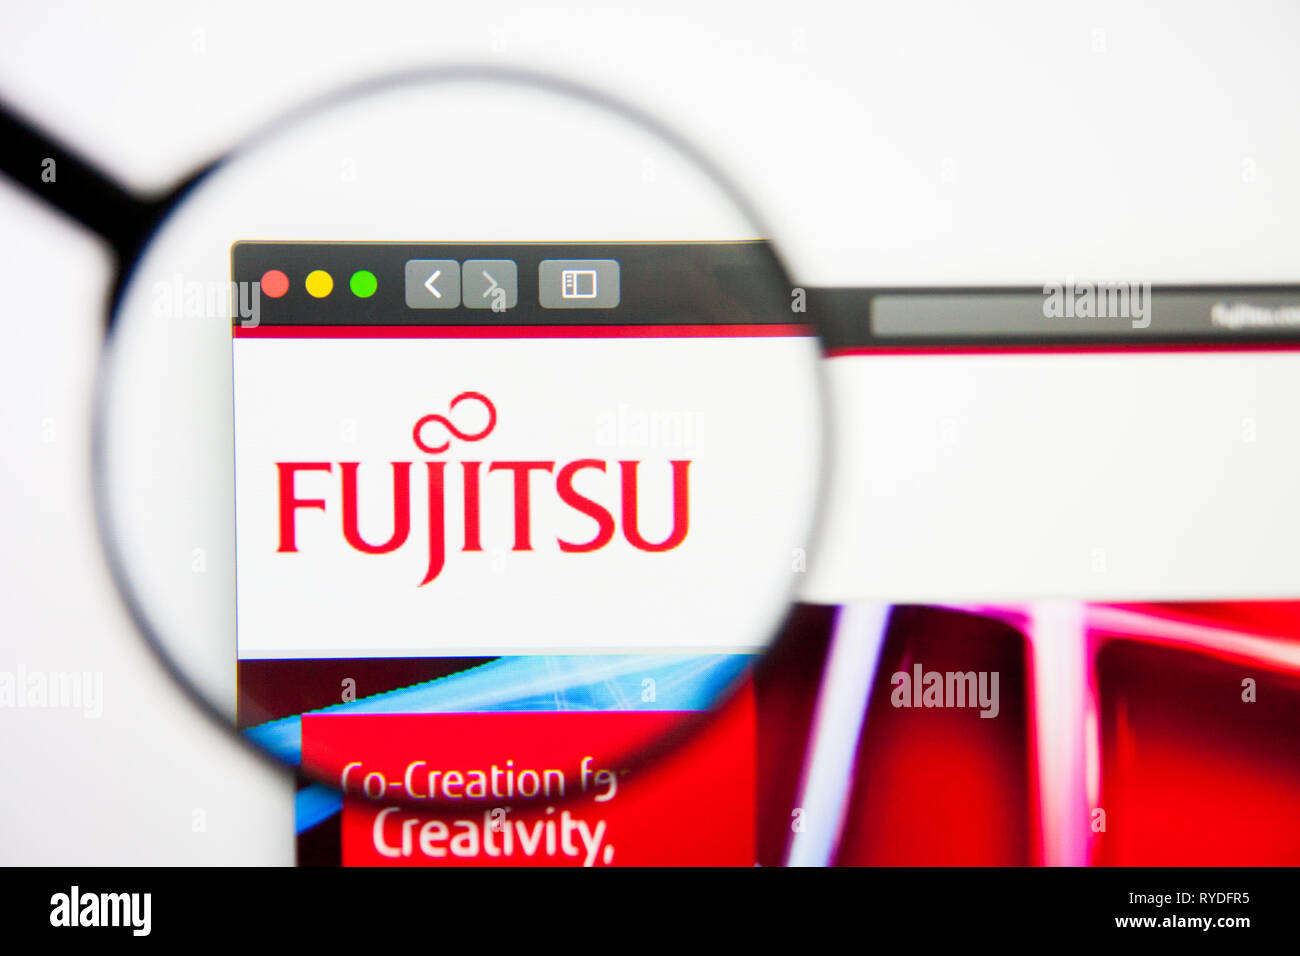 Los Angeles, California, USA - 5 March 2019: Fujitsu website homepage. Fujitsu logo visible on display screen, Illustrative Editorial Stock Photo